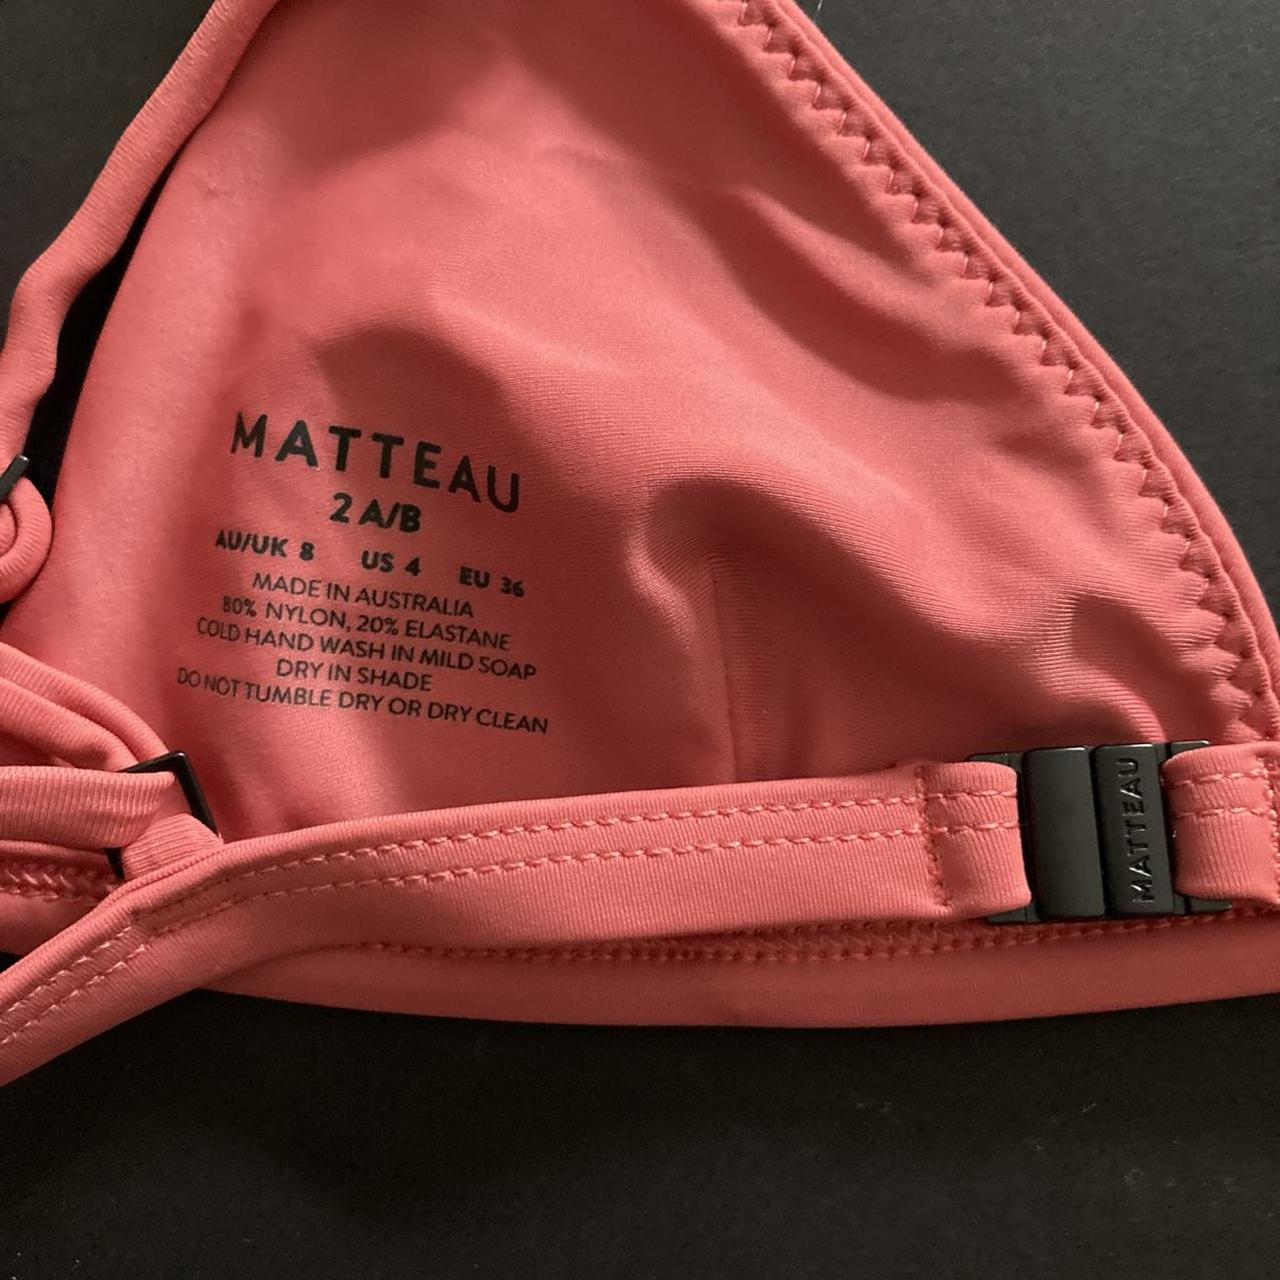 Product Image 2 - • Matteau bikini top size